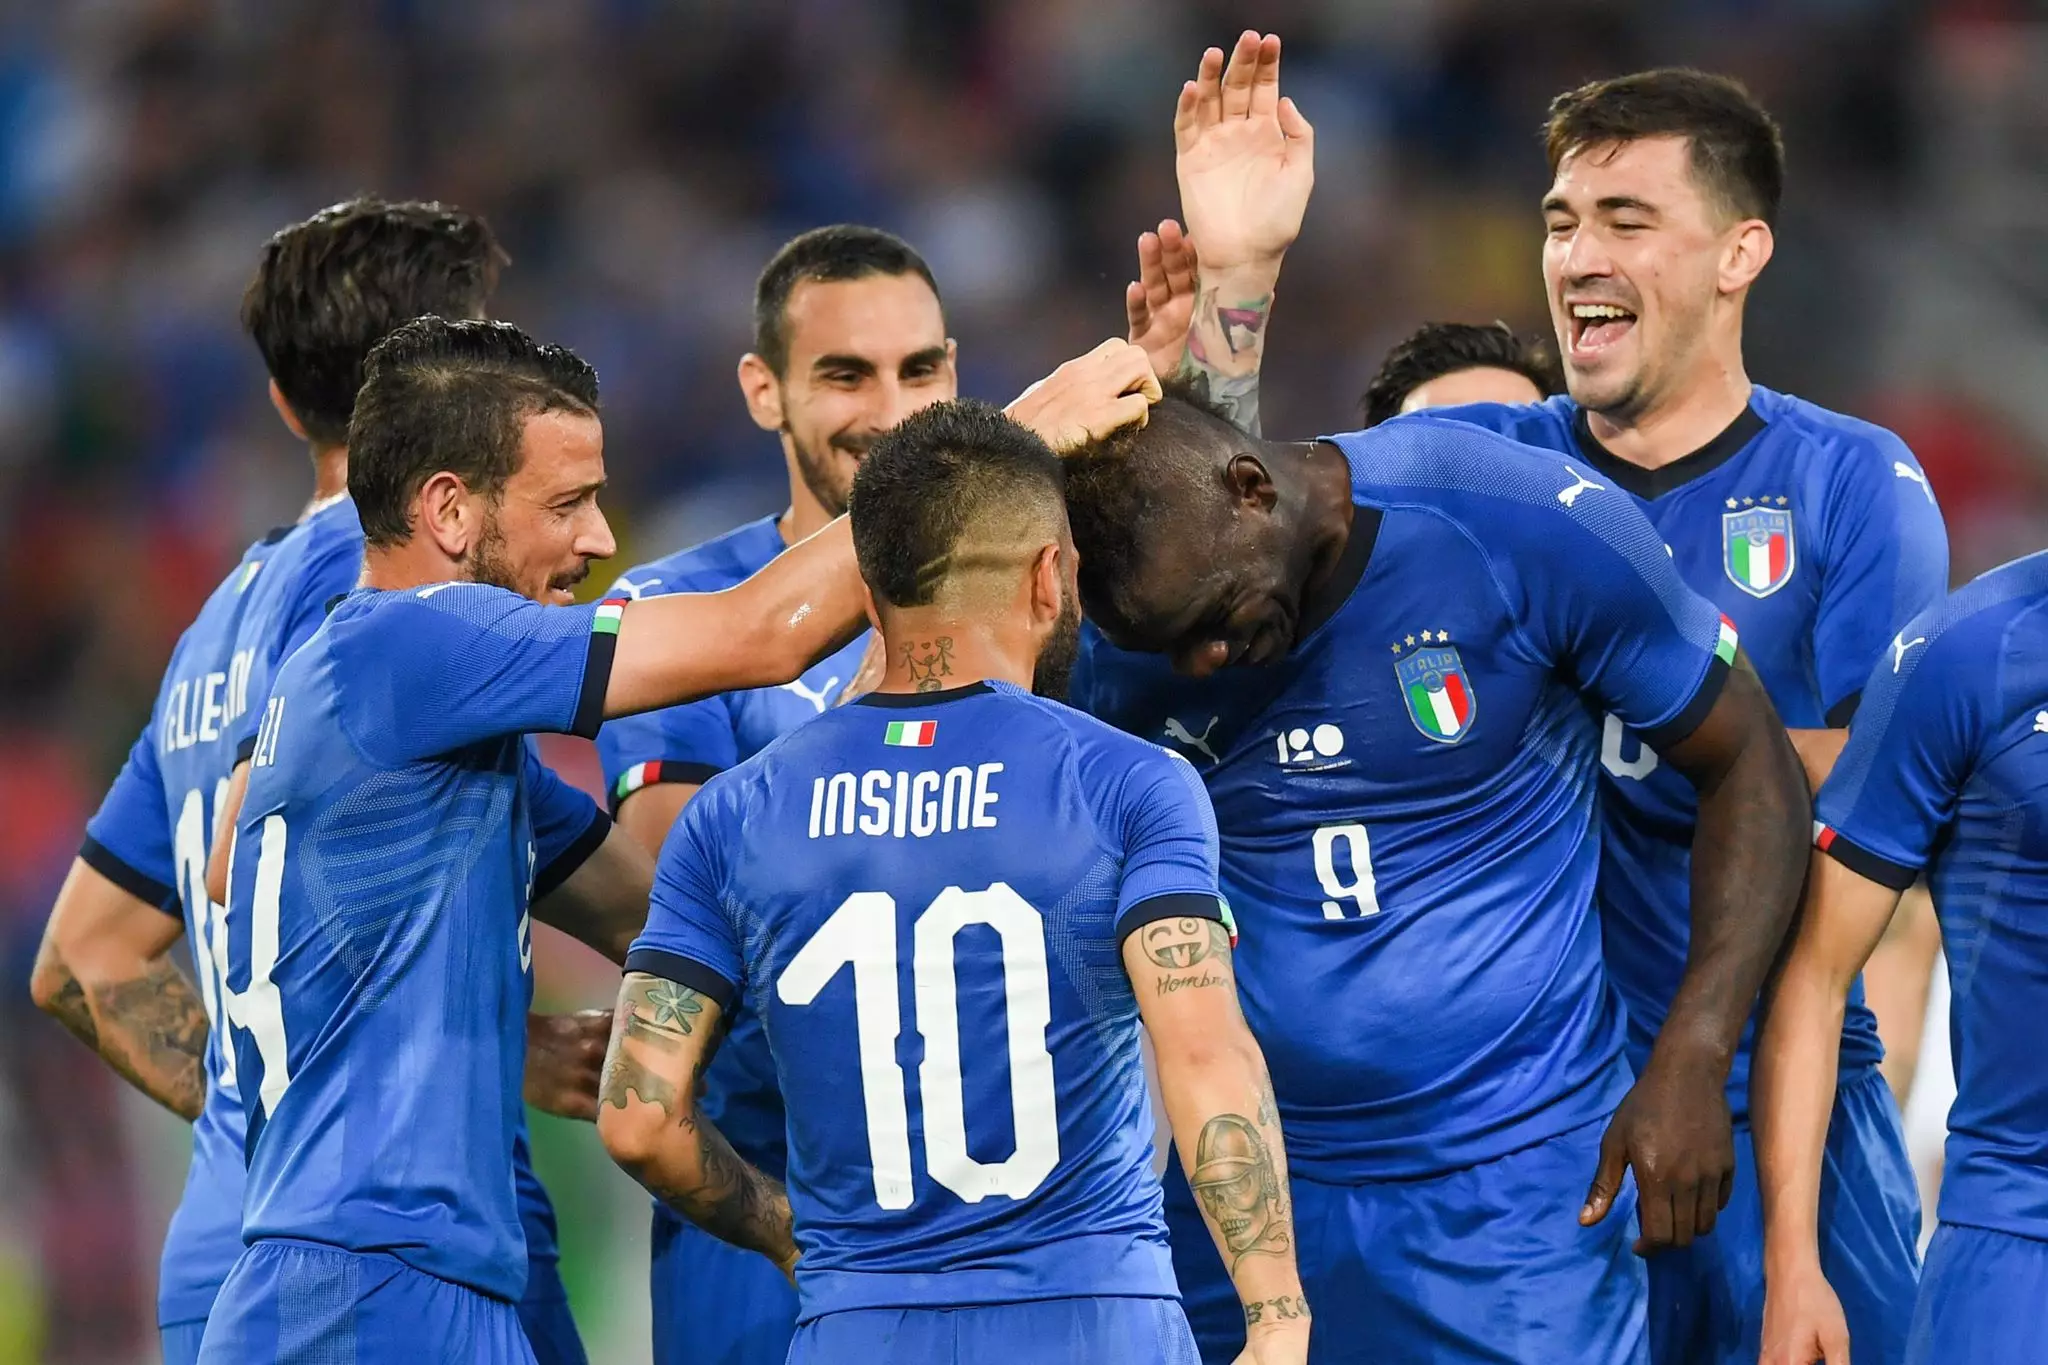 Teammates celebrate after Balotelli scores. Image: PA